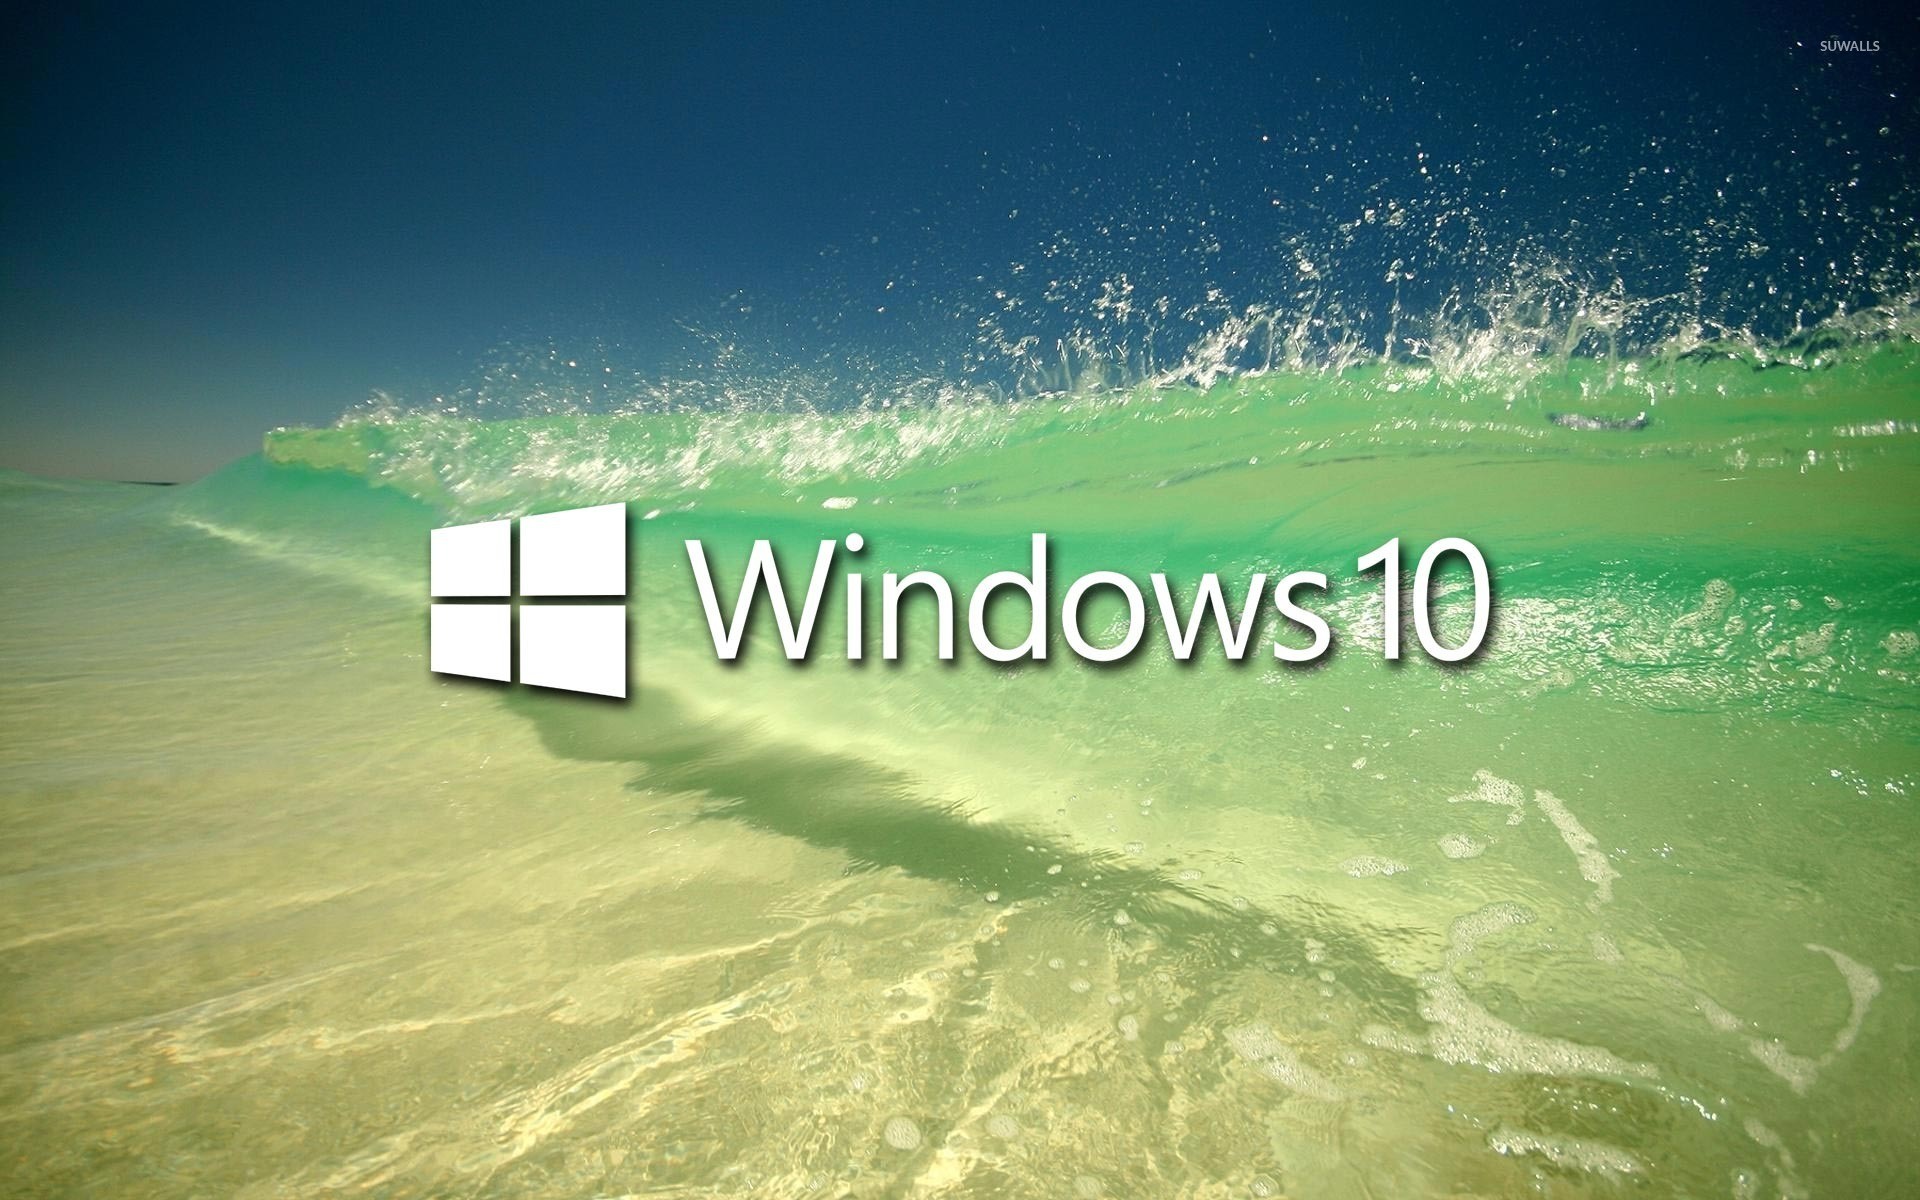 Windows 10 Hd Wallpapers 1920x1200 - Windows Wallpaper Px Wallpapers Hd